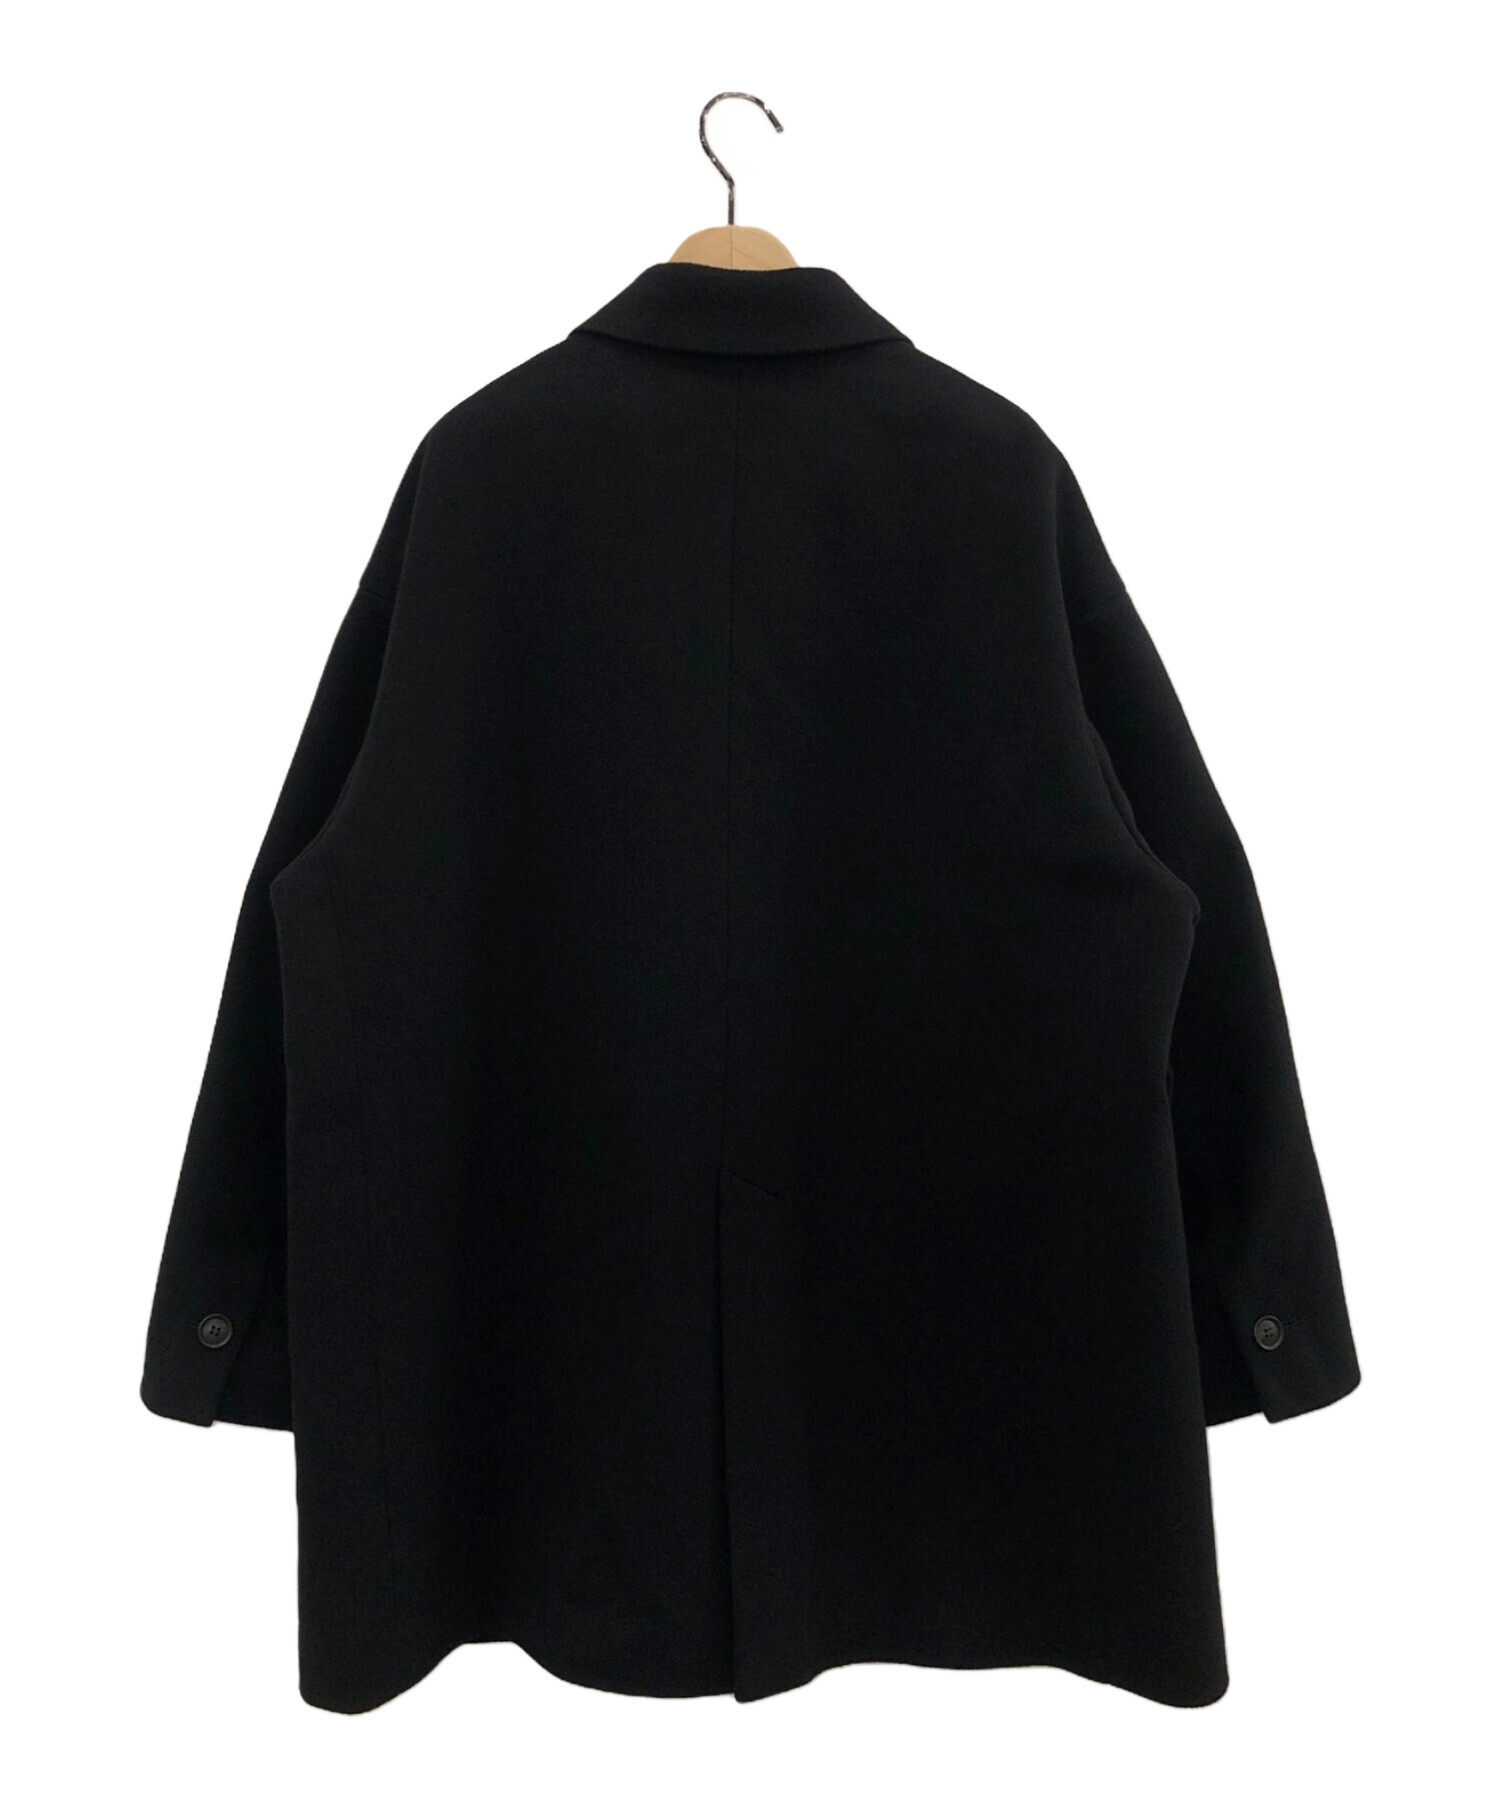 AP STUDIO (エーピーストゥディオ) Over-sized Jacket Coat ブラック サイズ:36